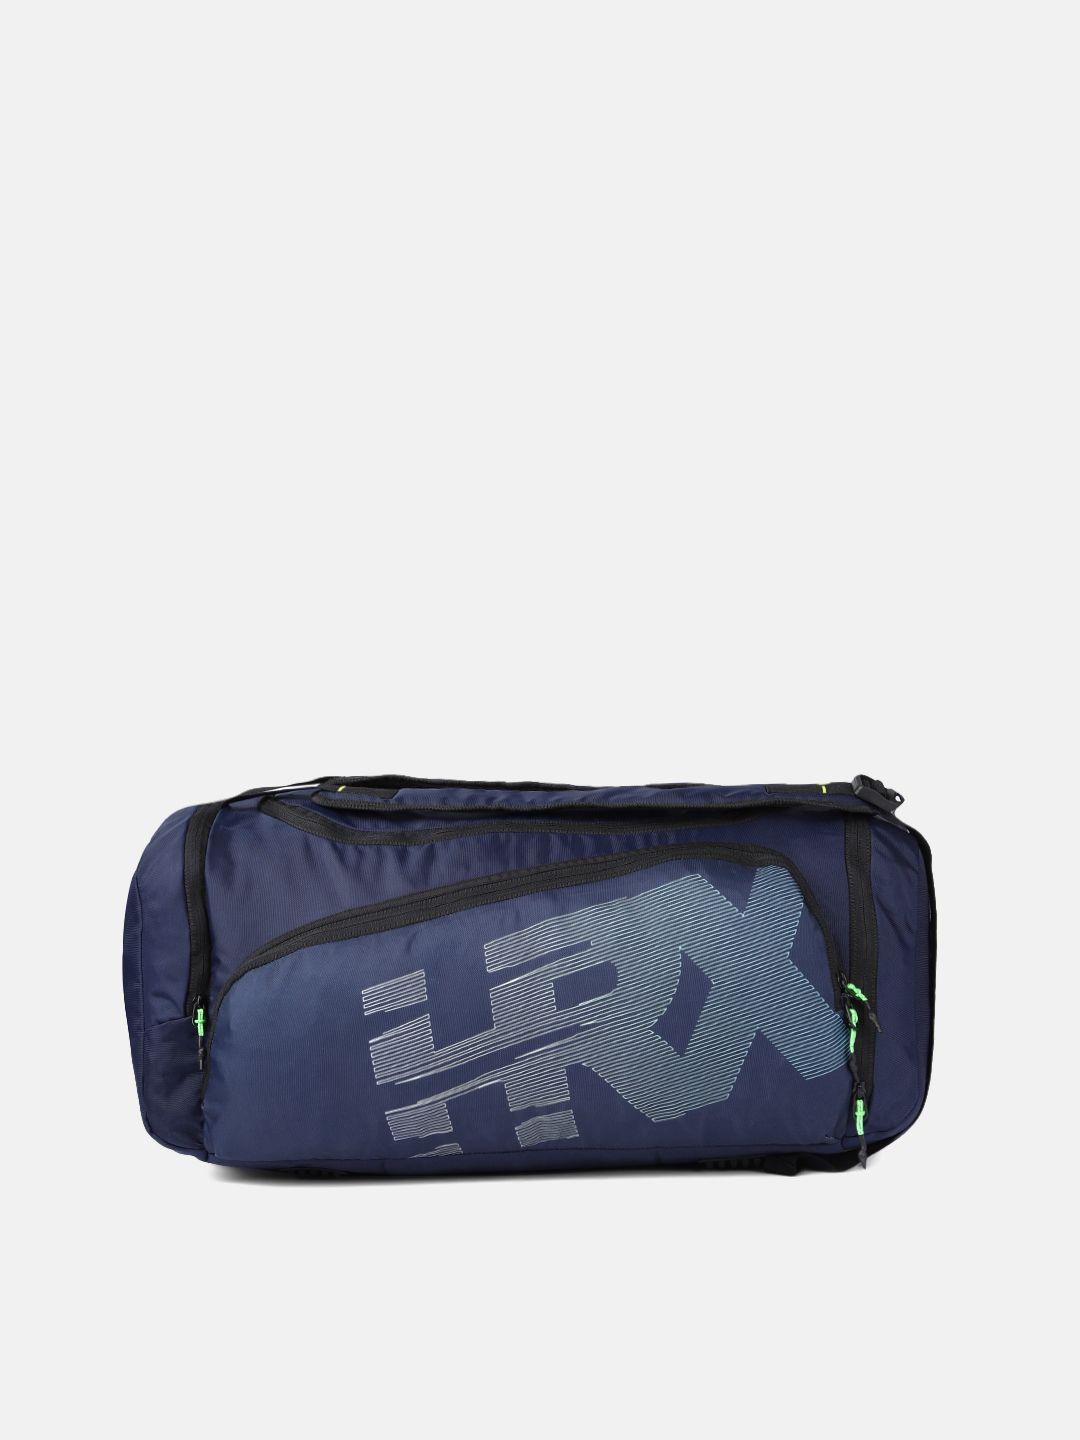 hrx by hrithik roshan unisex navy blue active tennis duffel bag cum backpack